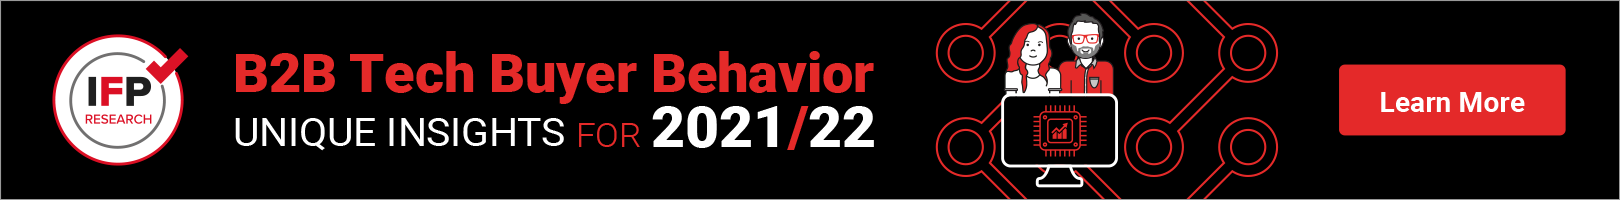 B2B Tech Buyer Behavior WP banner